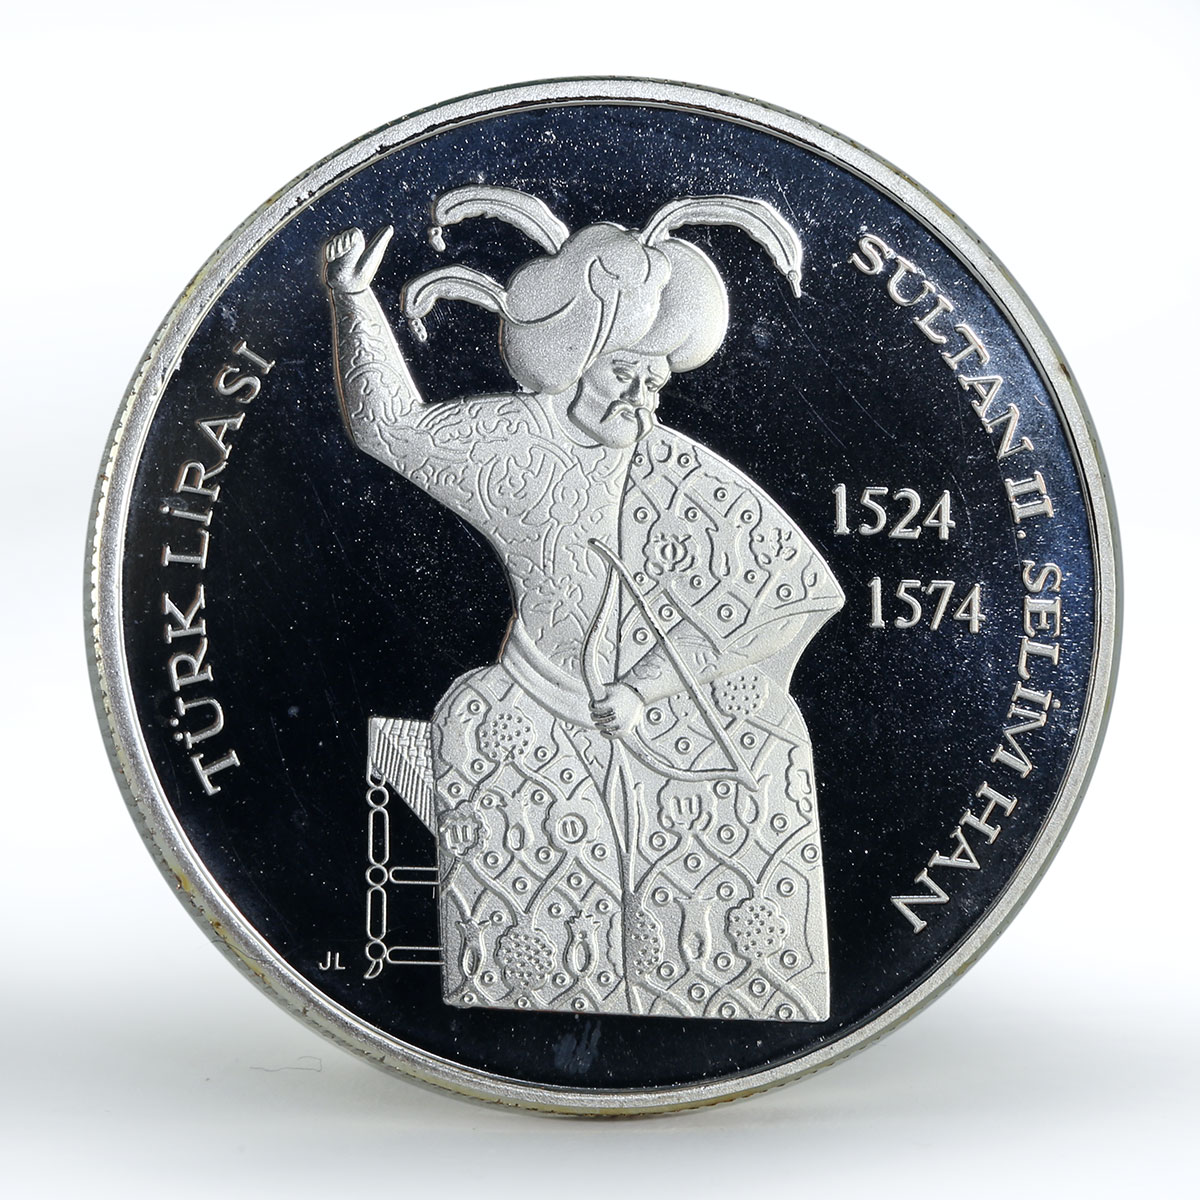 Northern Cyprus Turkish lira Sultan II Selim Han nickel token 2015